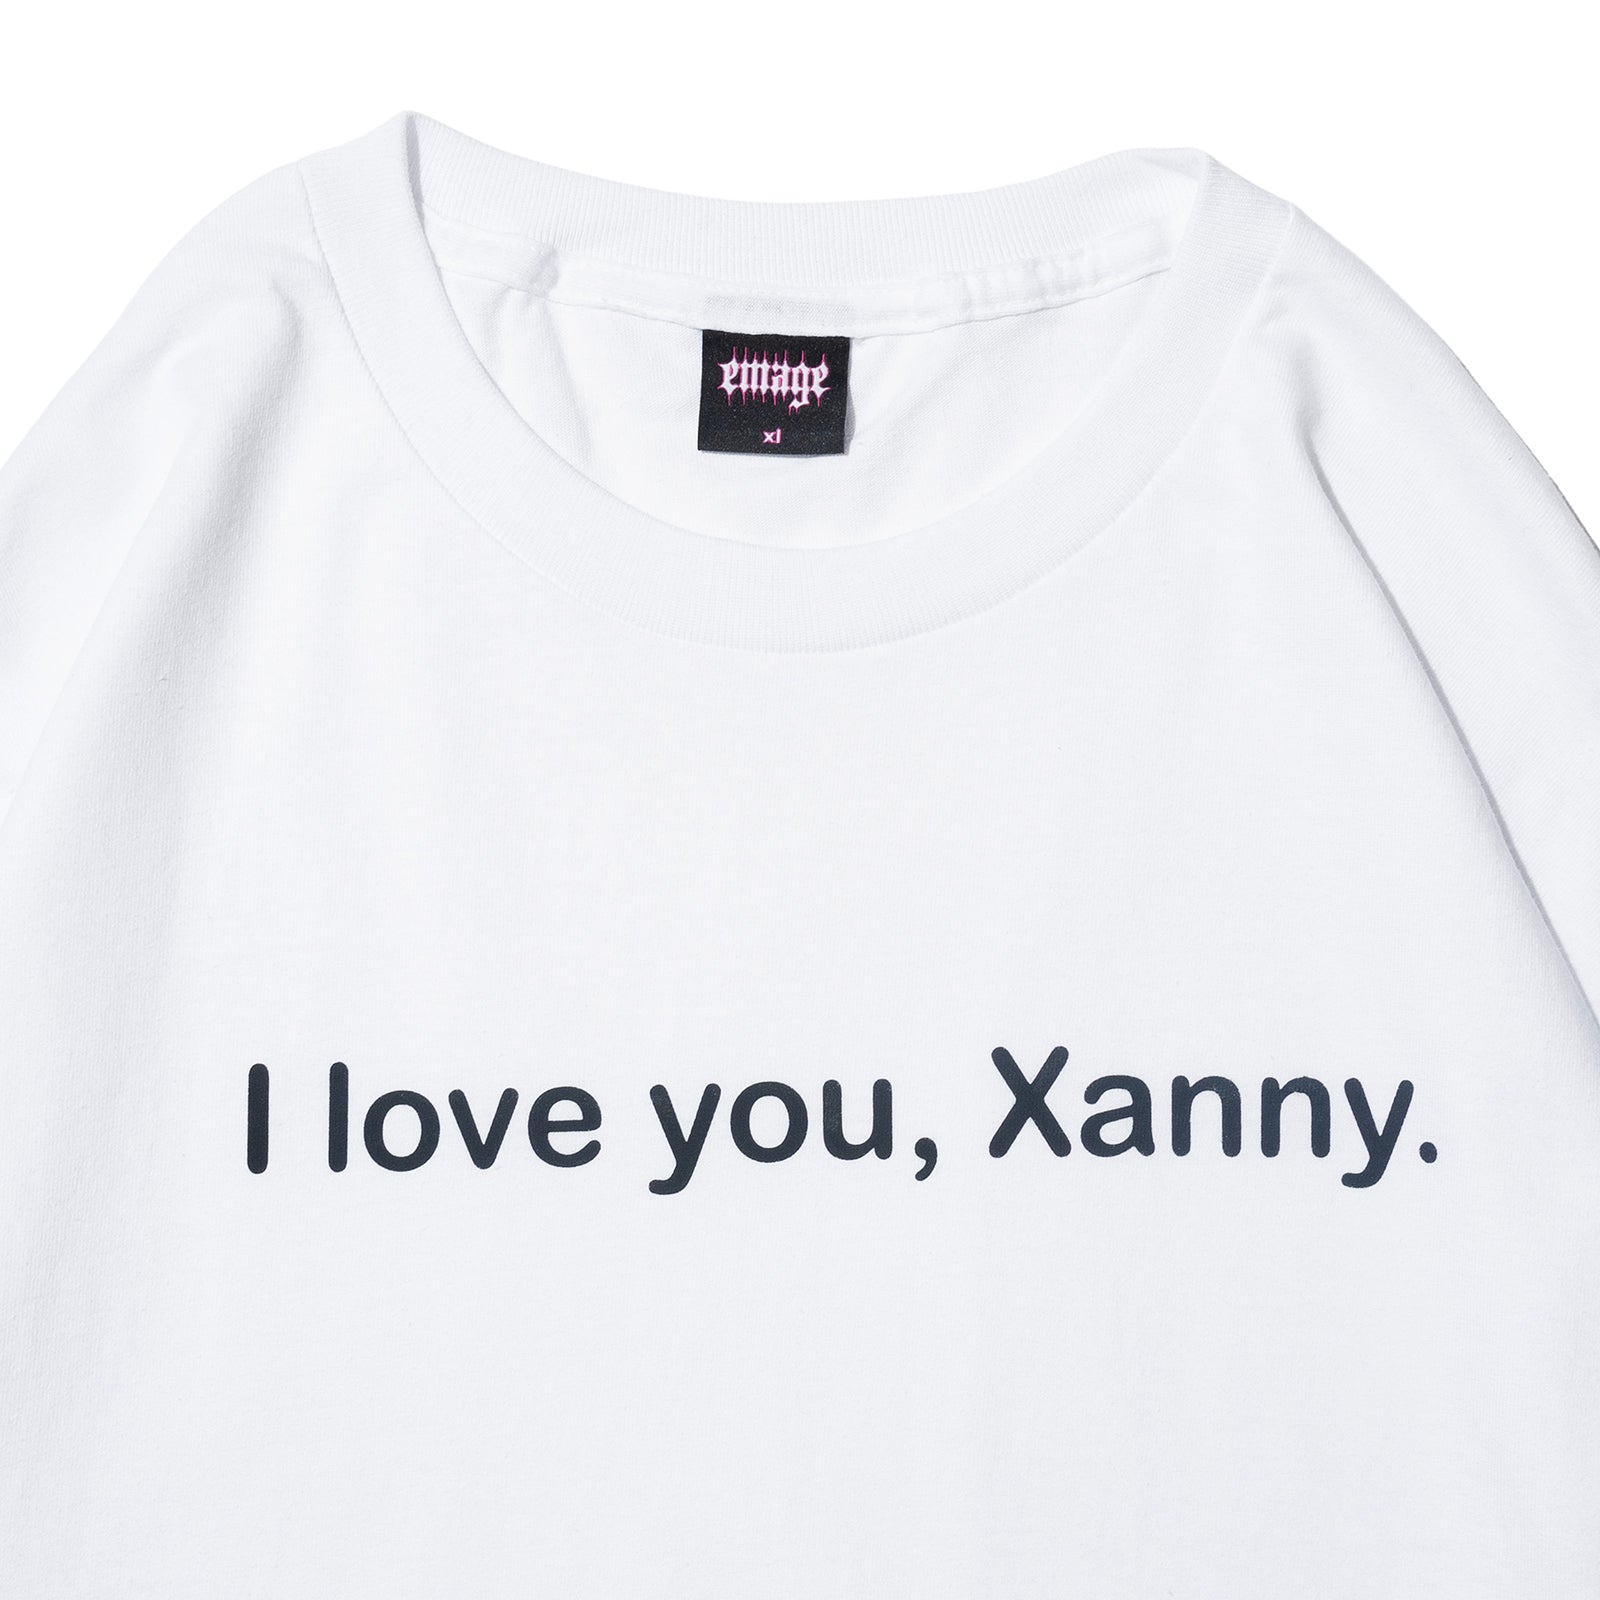 I LOVE YOU, XANNY. TEE (White)